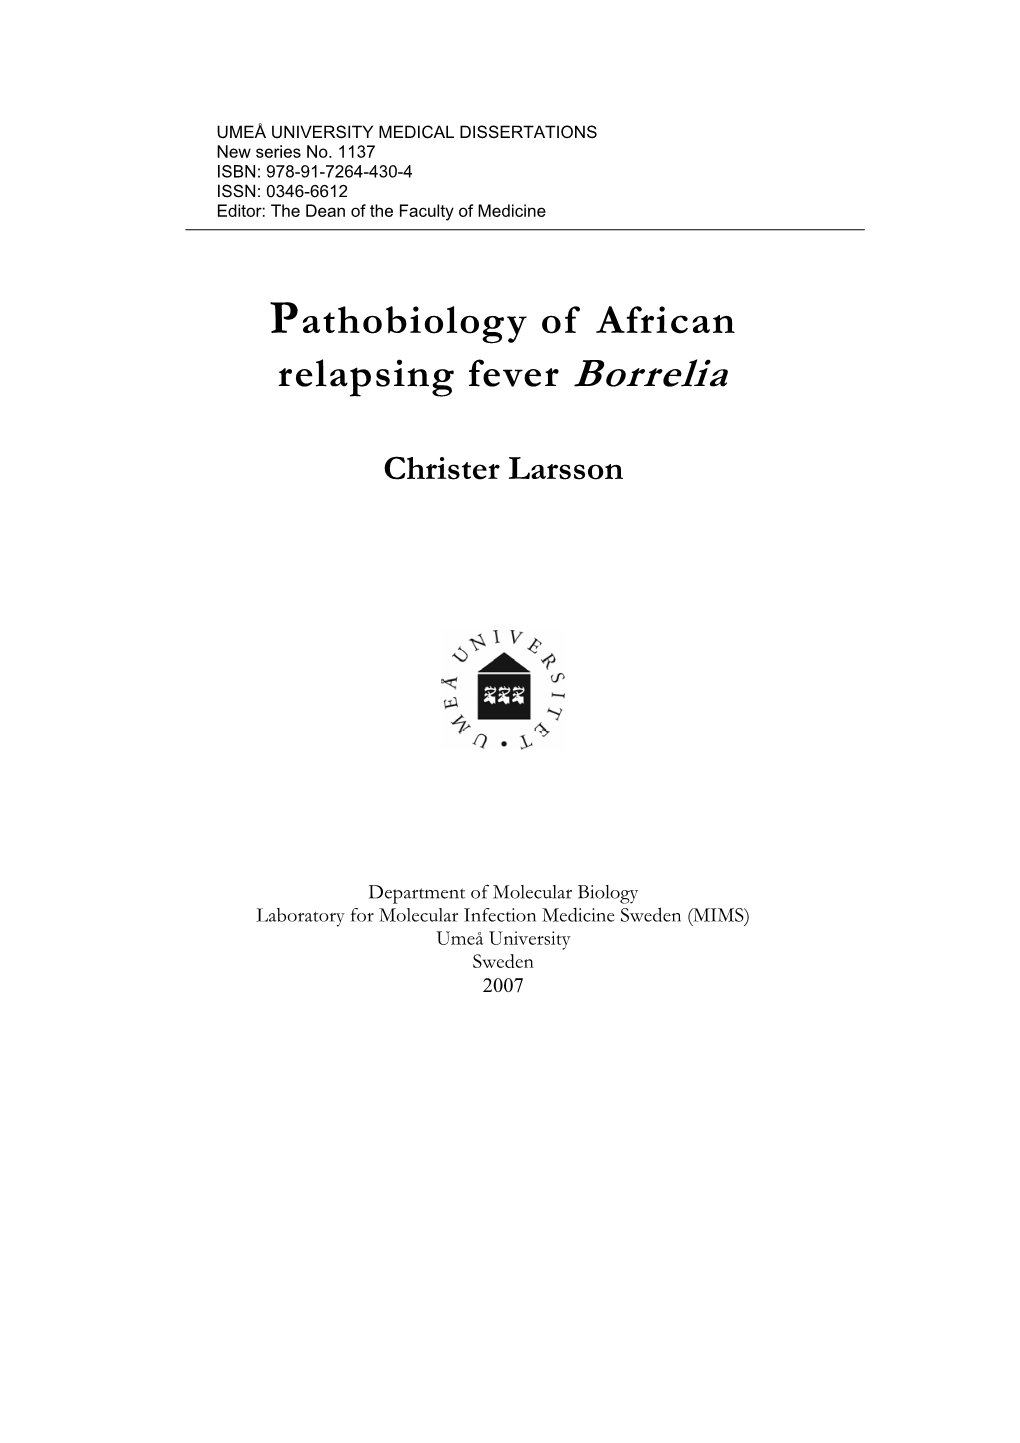 Pathobiology of African Relapsing Fever Borrelia